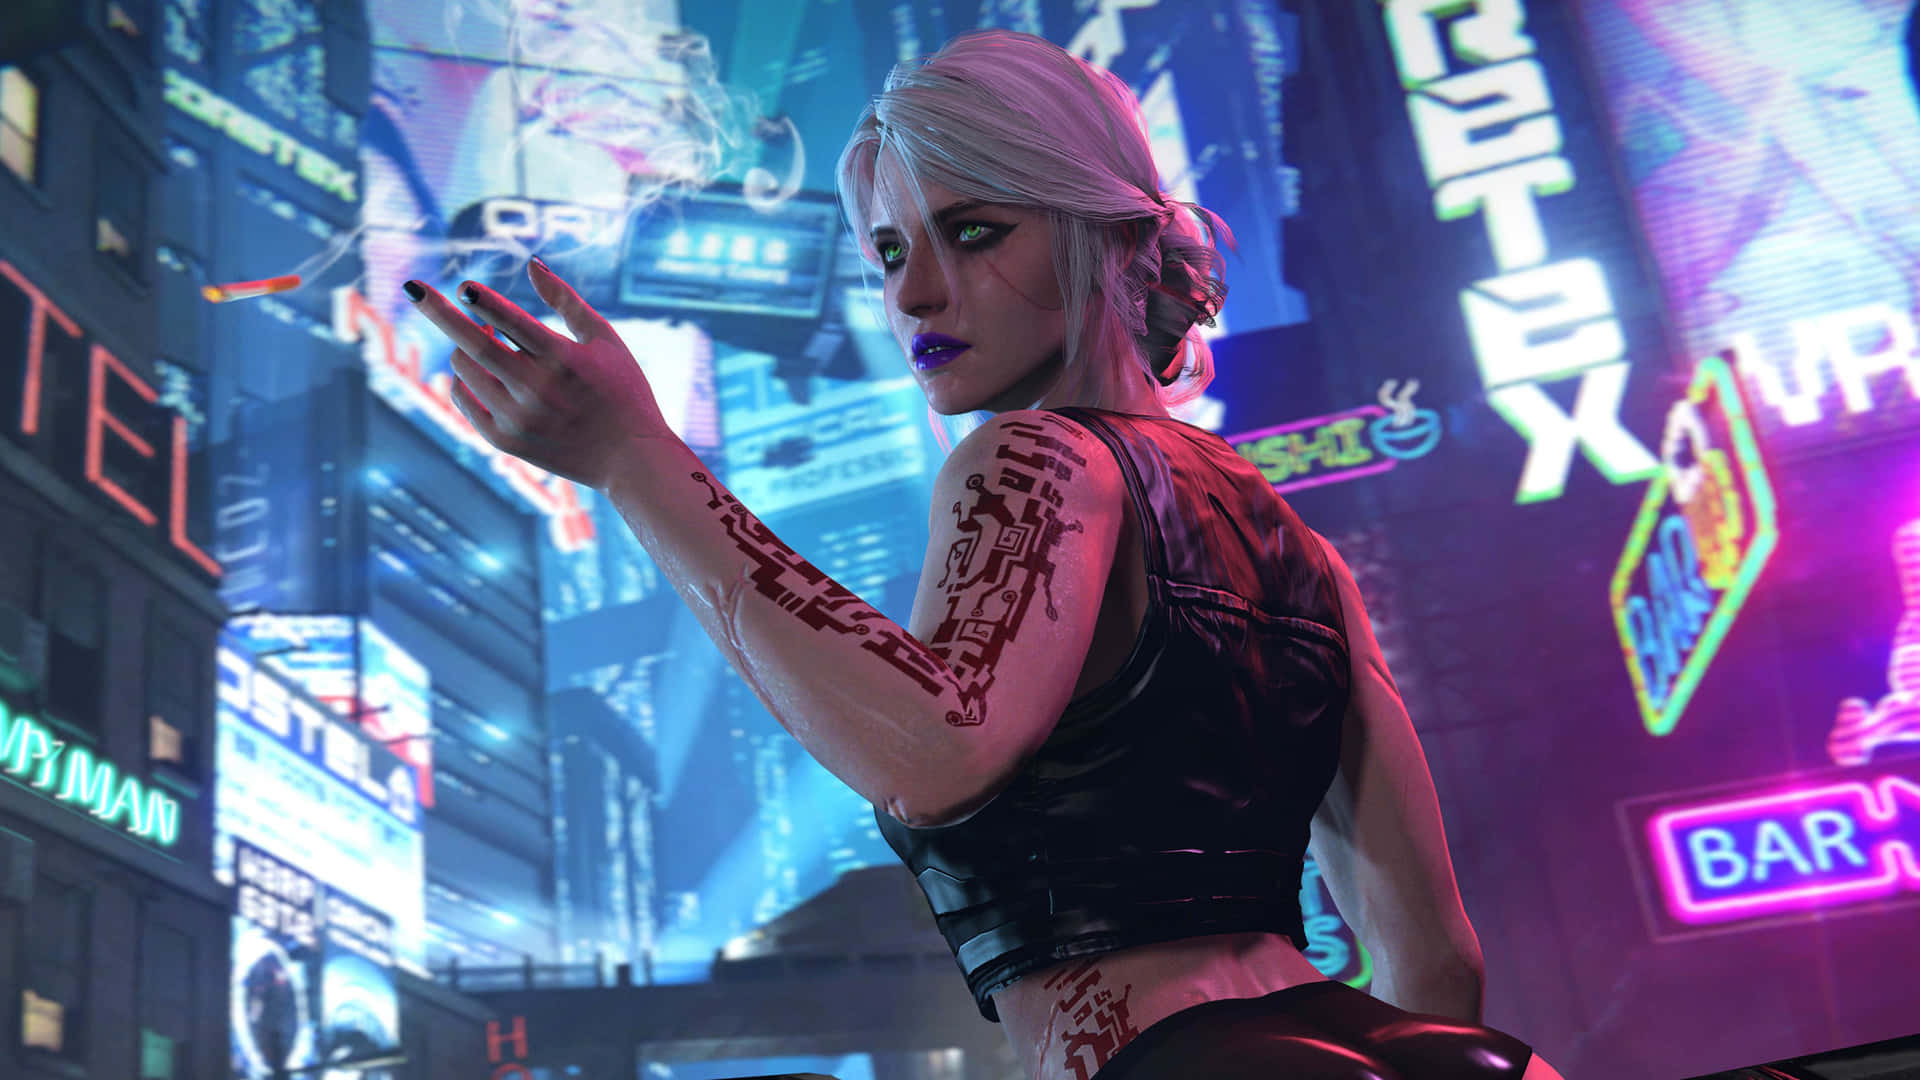 Fondode Pantalla De Una Cíborg Femenina En Calidad 1440p Inspirada En Cyberpunk 2077.